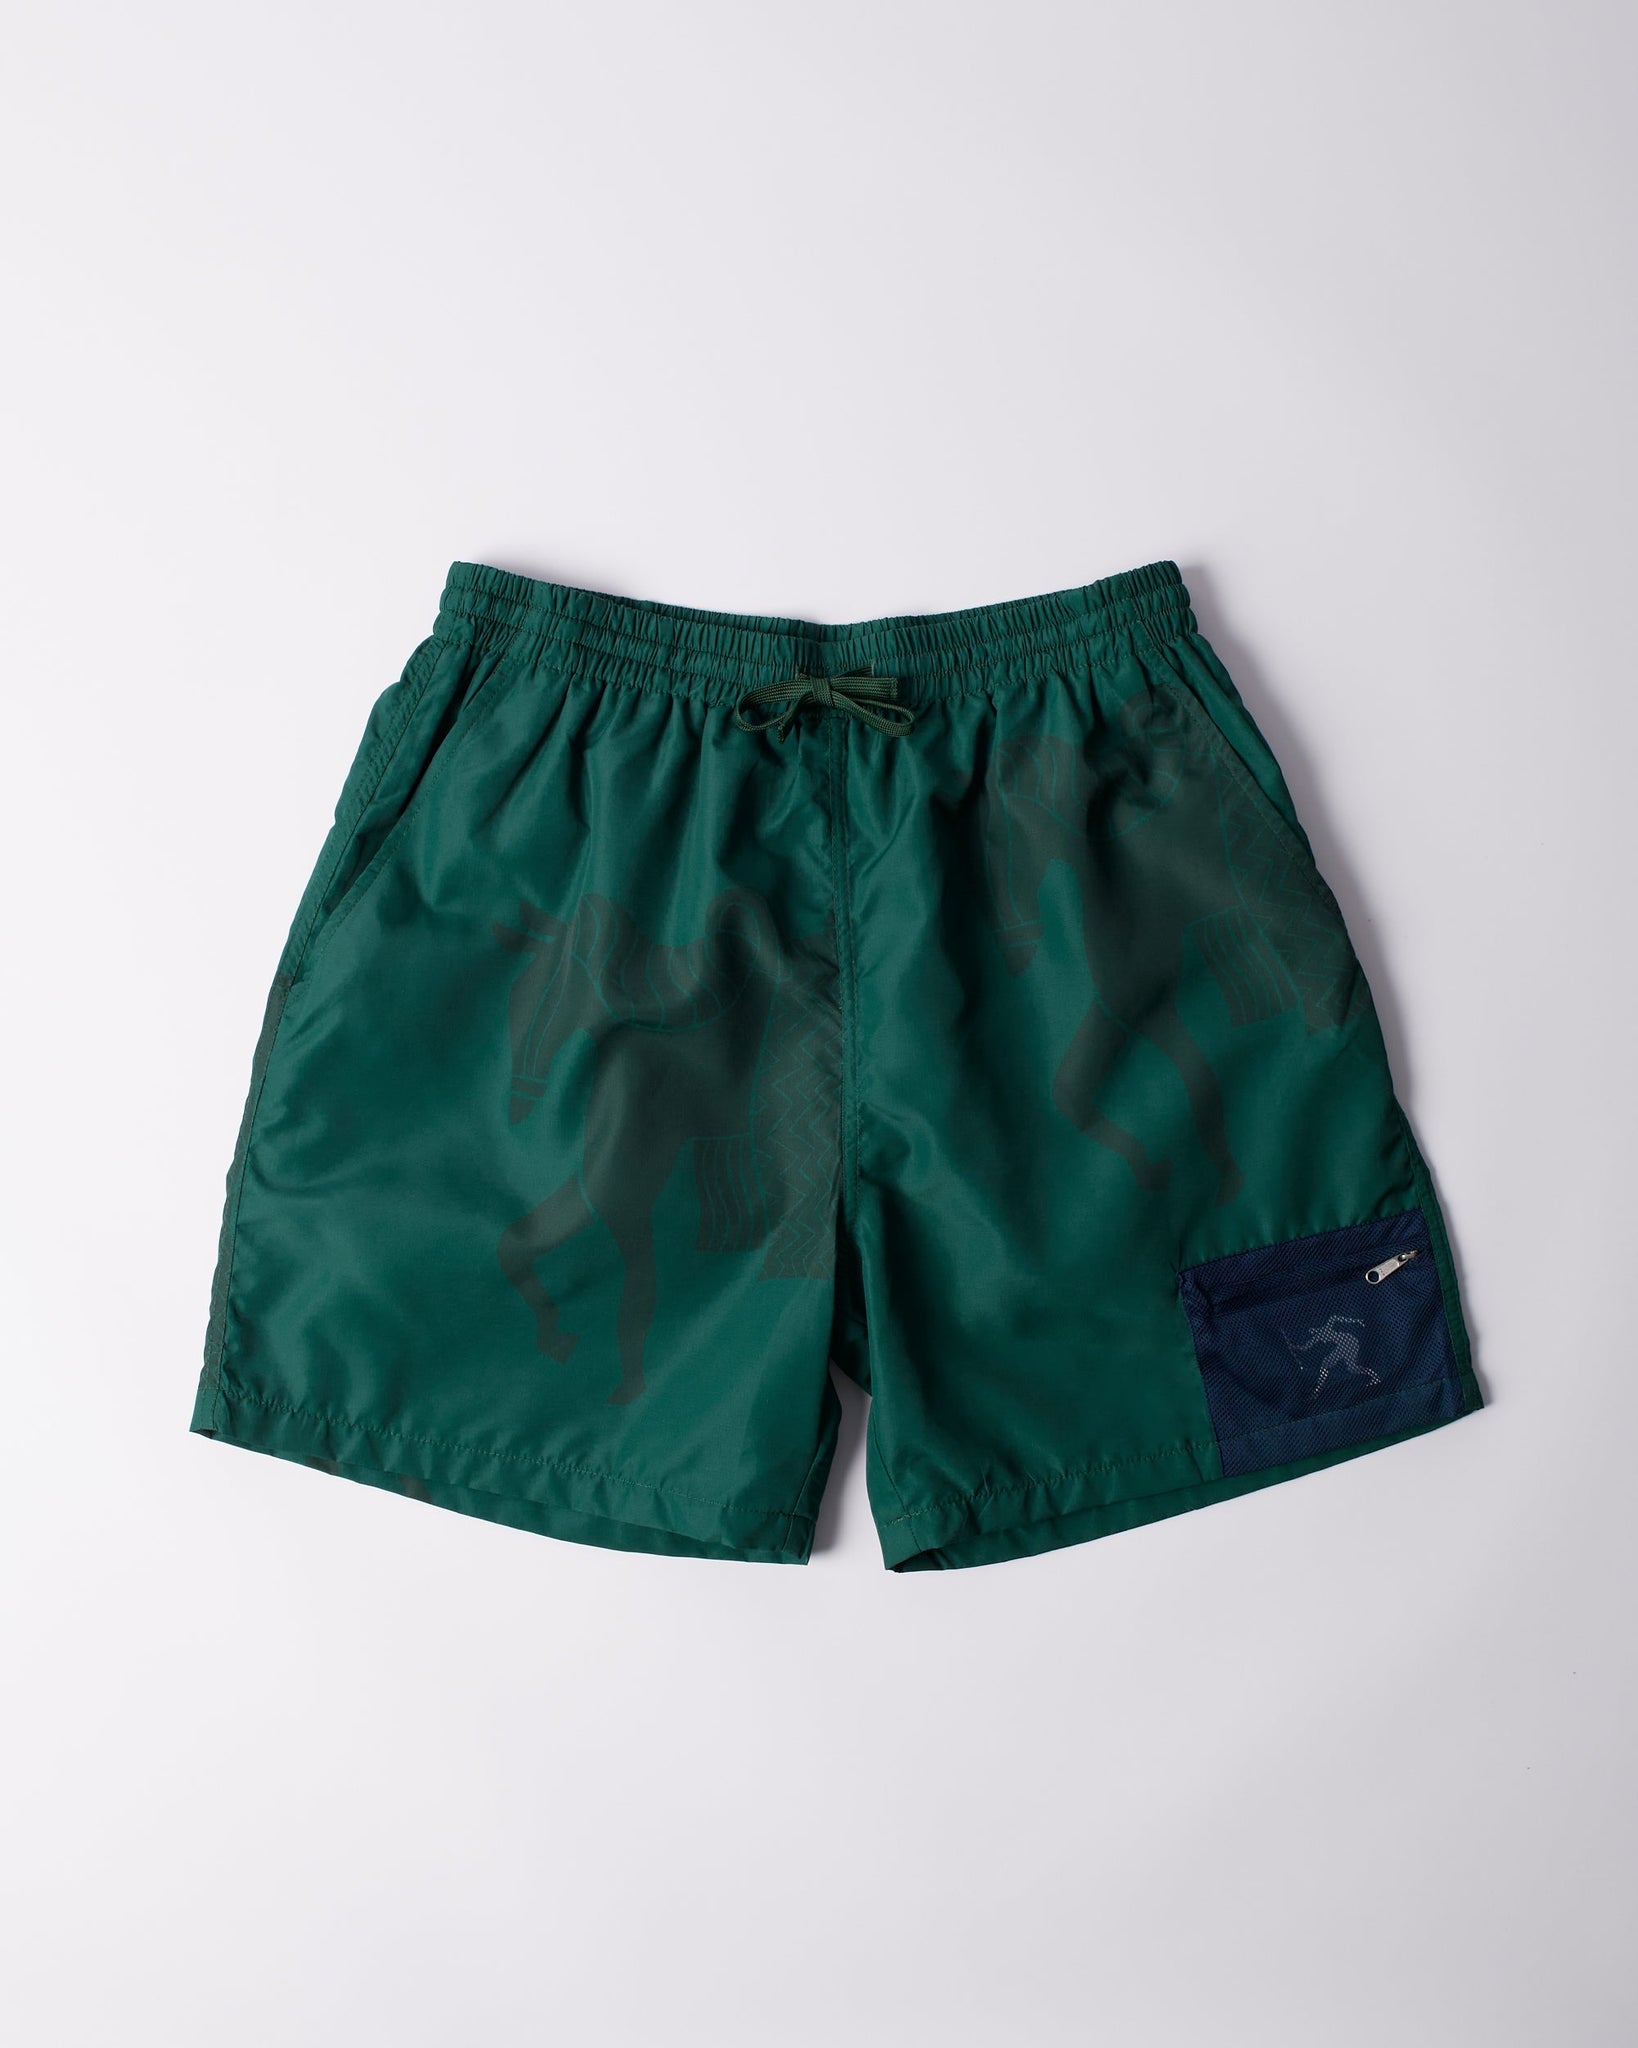 Short horse shorts - pine green